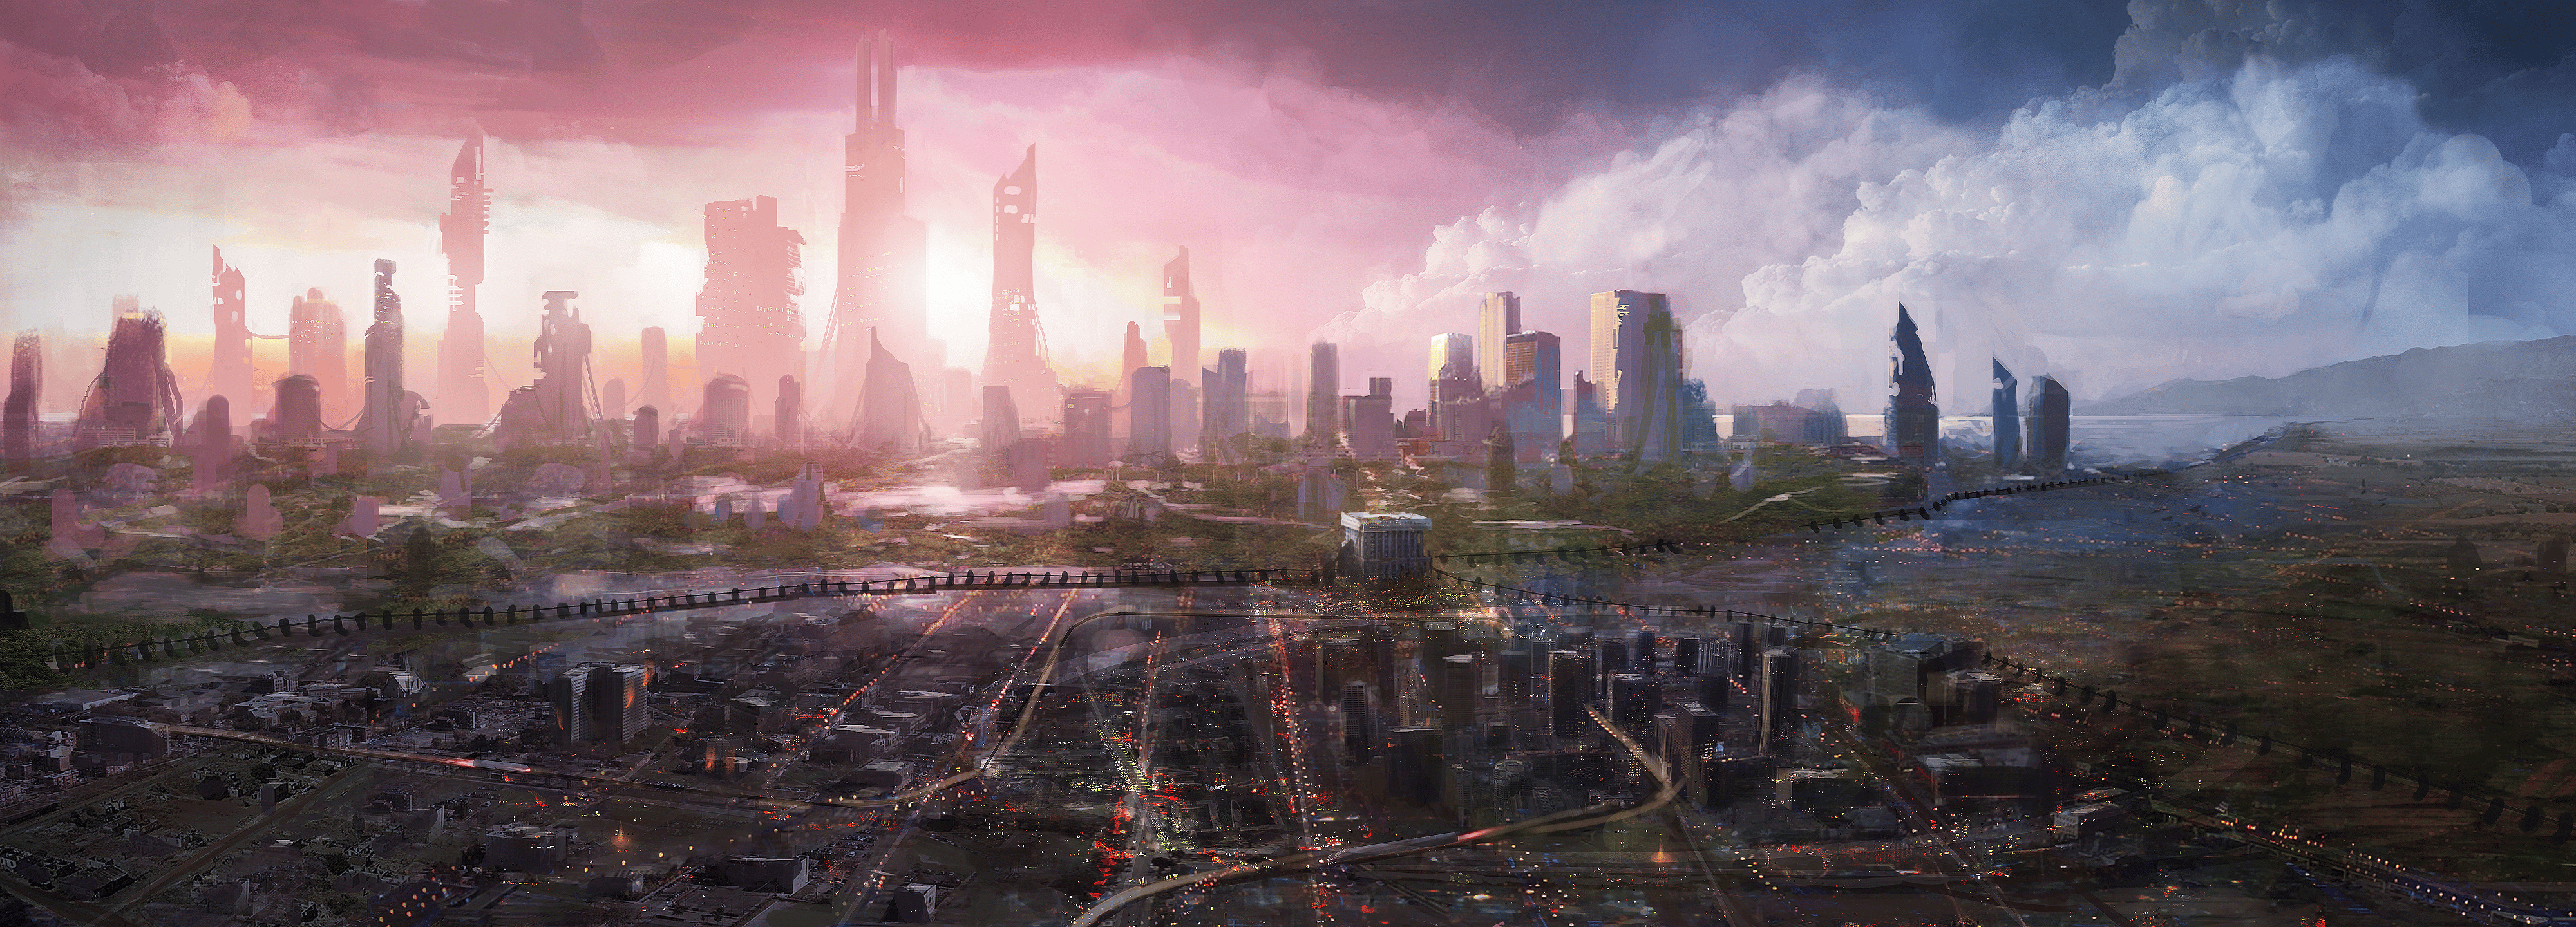 Jordan Grimmer Cityscape Futuristic Science Fiction Digital Art 4000x1440